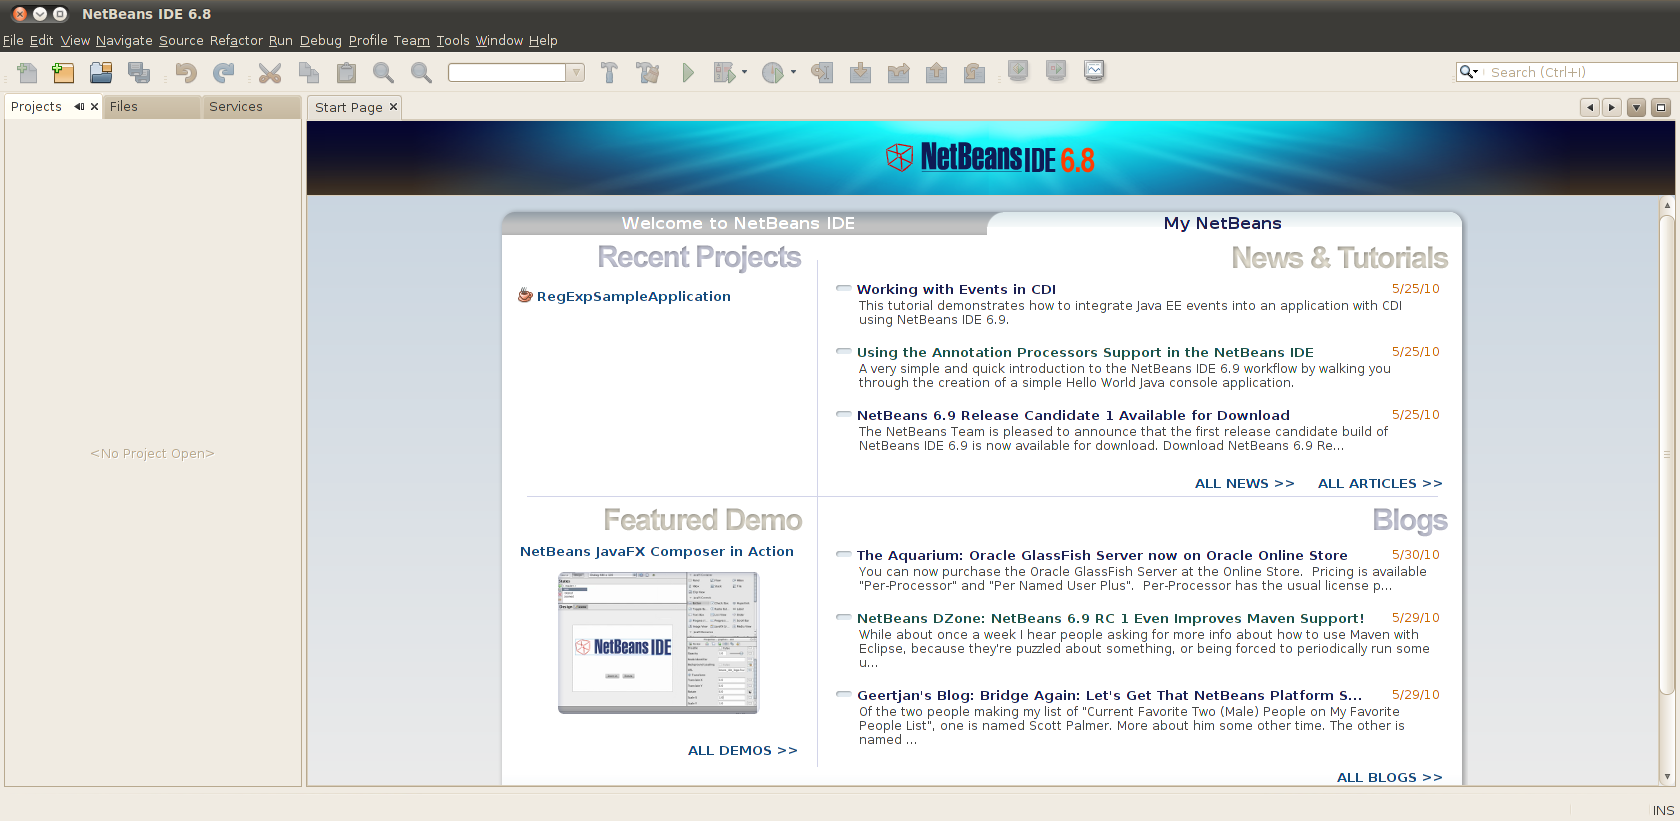 REVIEW Netbeans του Κωστάρα Γιάννη Ένα σύγχρονο IDE. Όσοι ασχολείστε με τη Java, σίγουρα το γνωρίζετε.